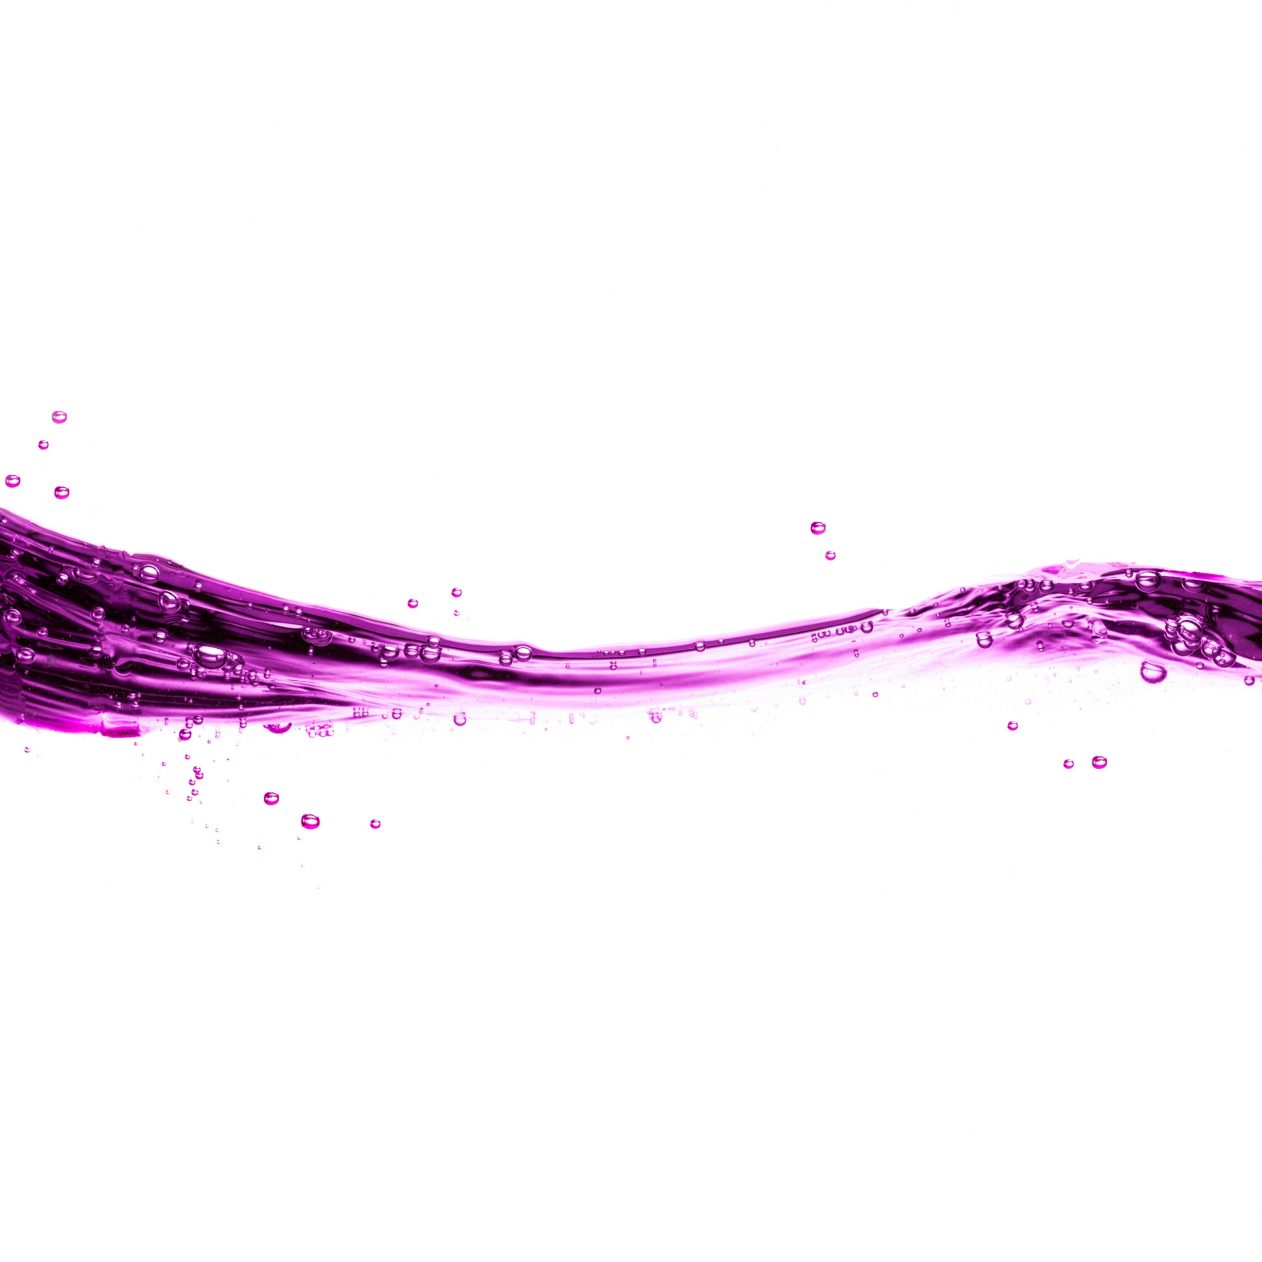 1262x1262 Parallax wallpaper 4k Purple Water Splash White Background iPad Wallpaper 1262x1262 pixels resolution